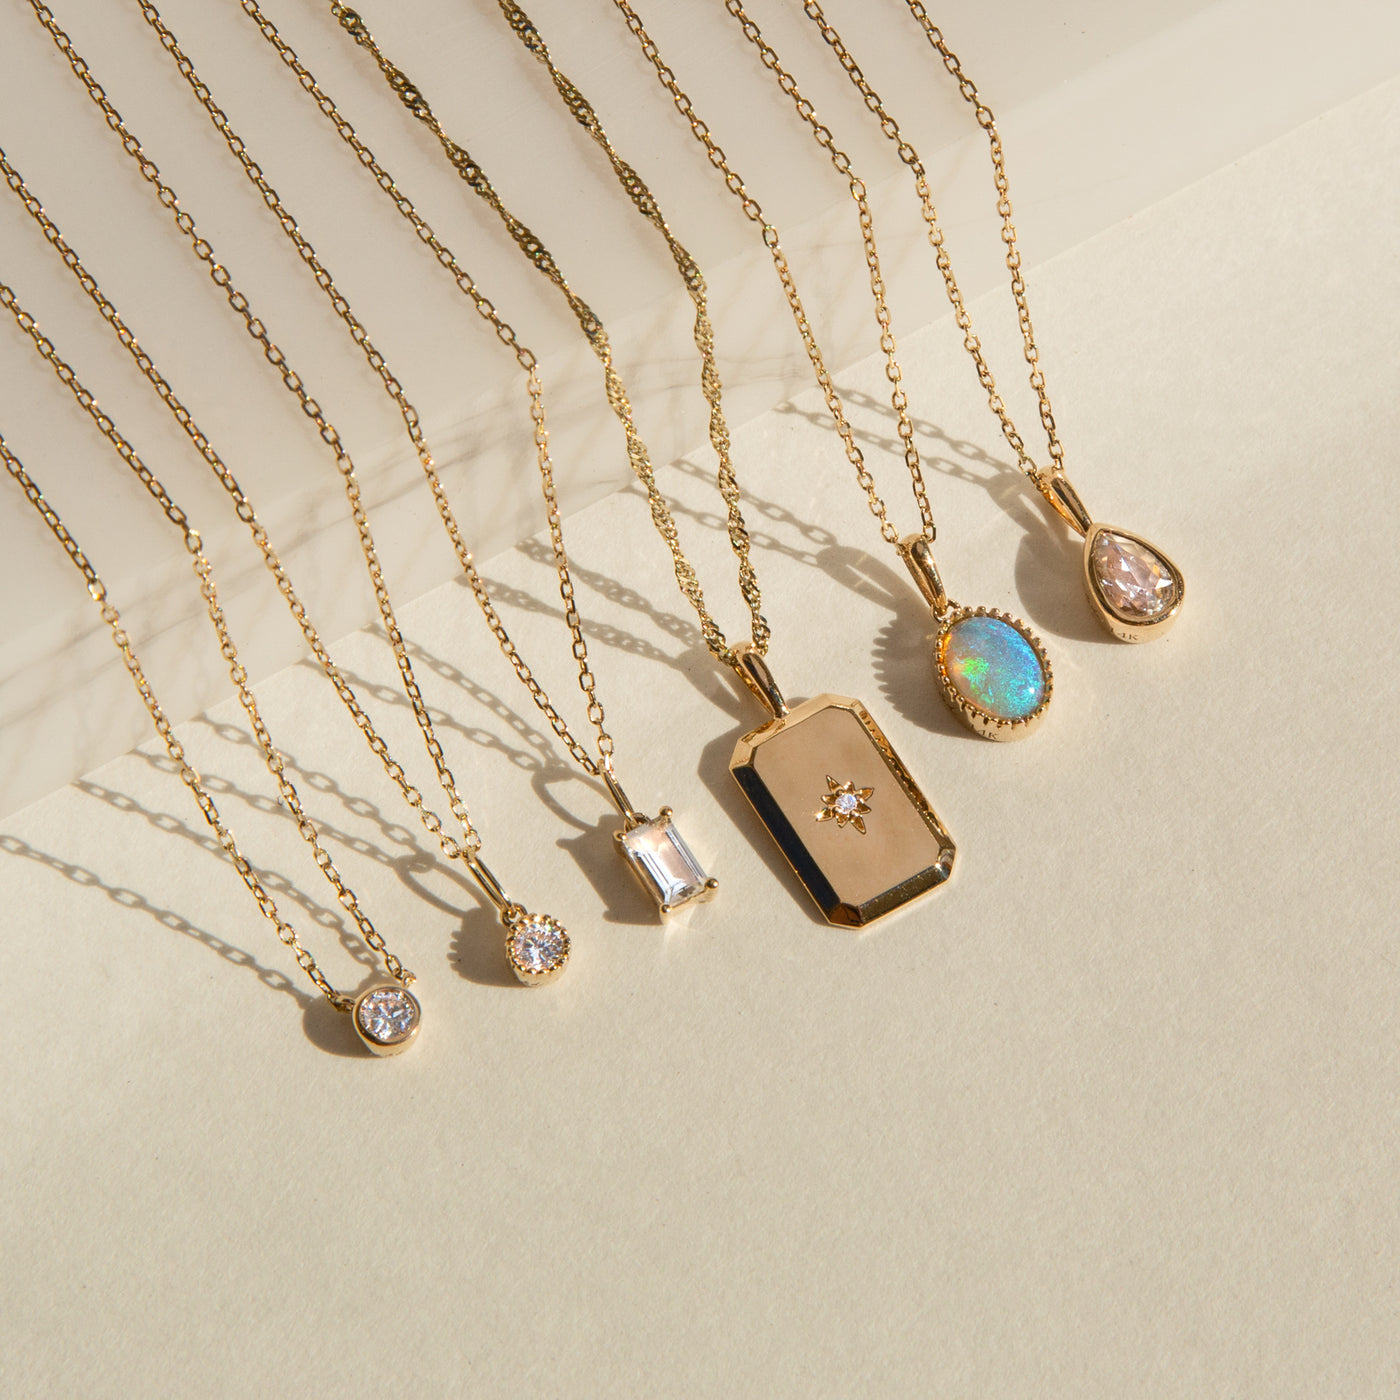 Oval Opal Necklace | Simple & Dainty Jewelry